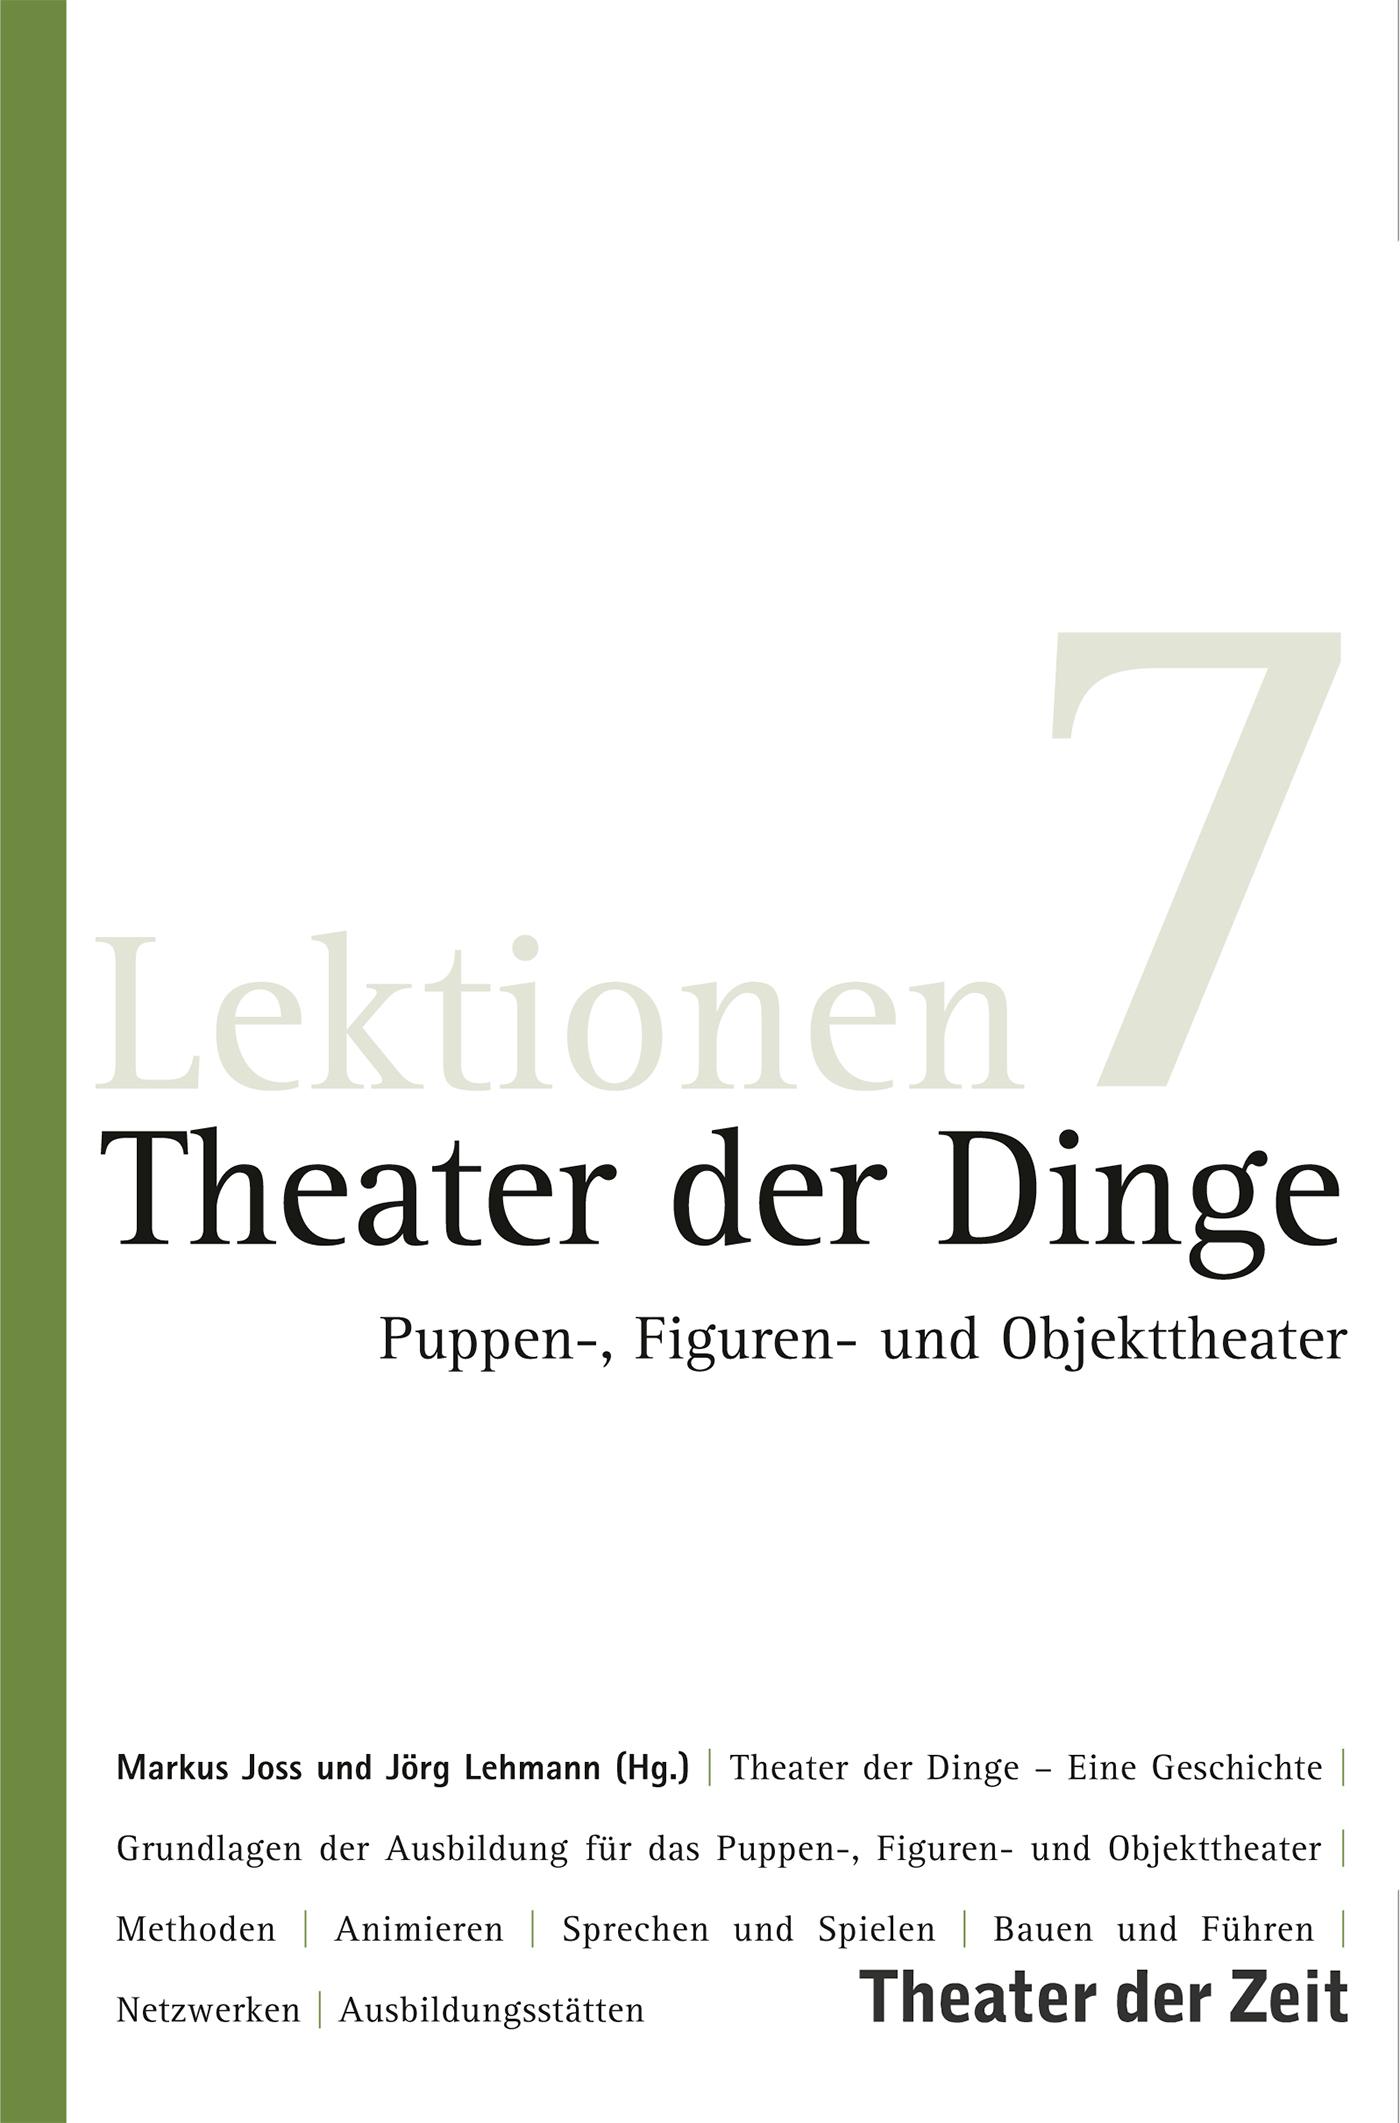 Lektionen 7 "Theater der Dinge"